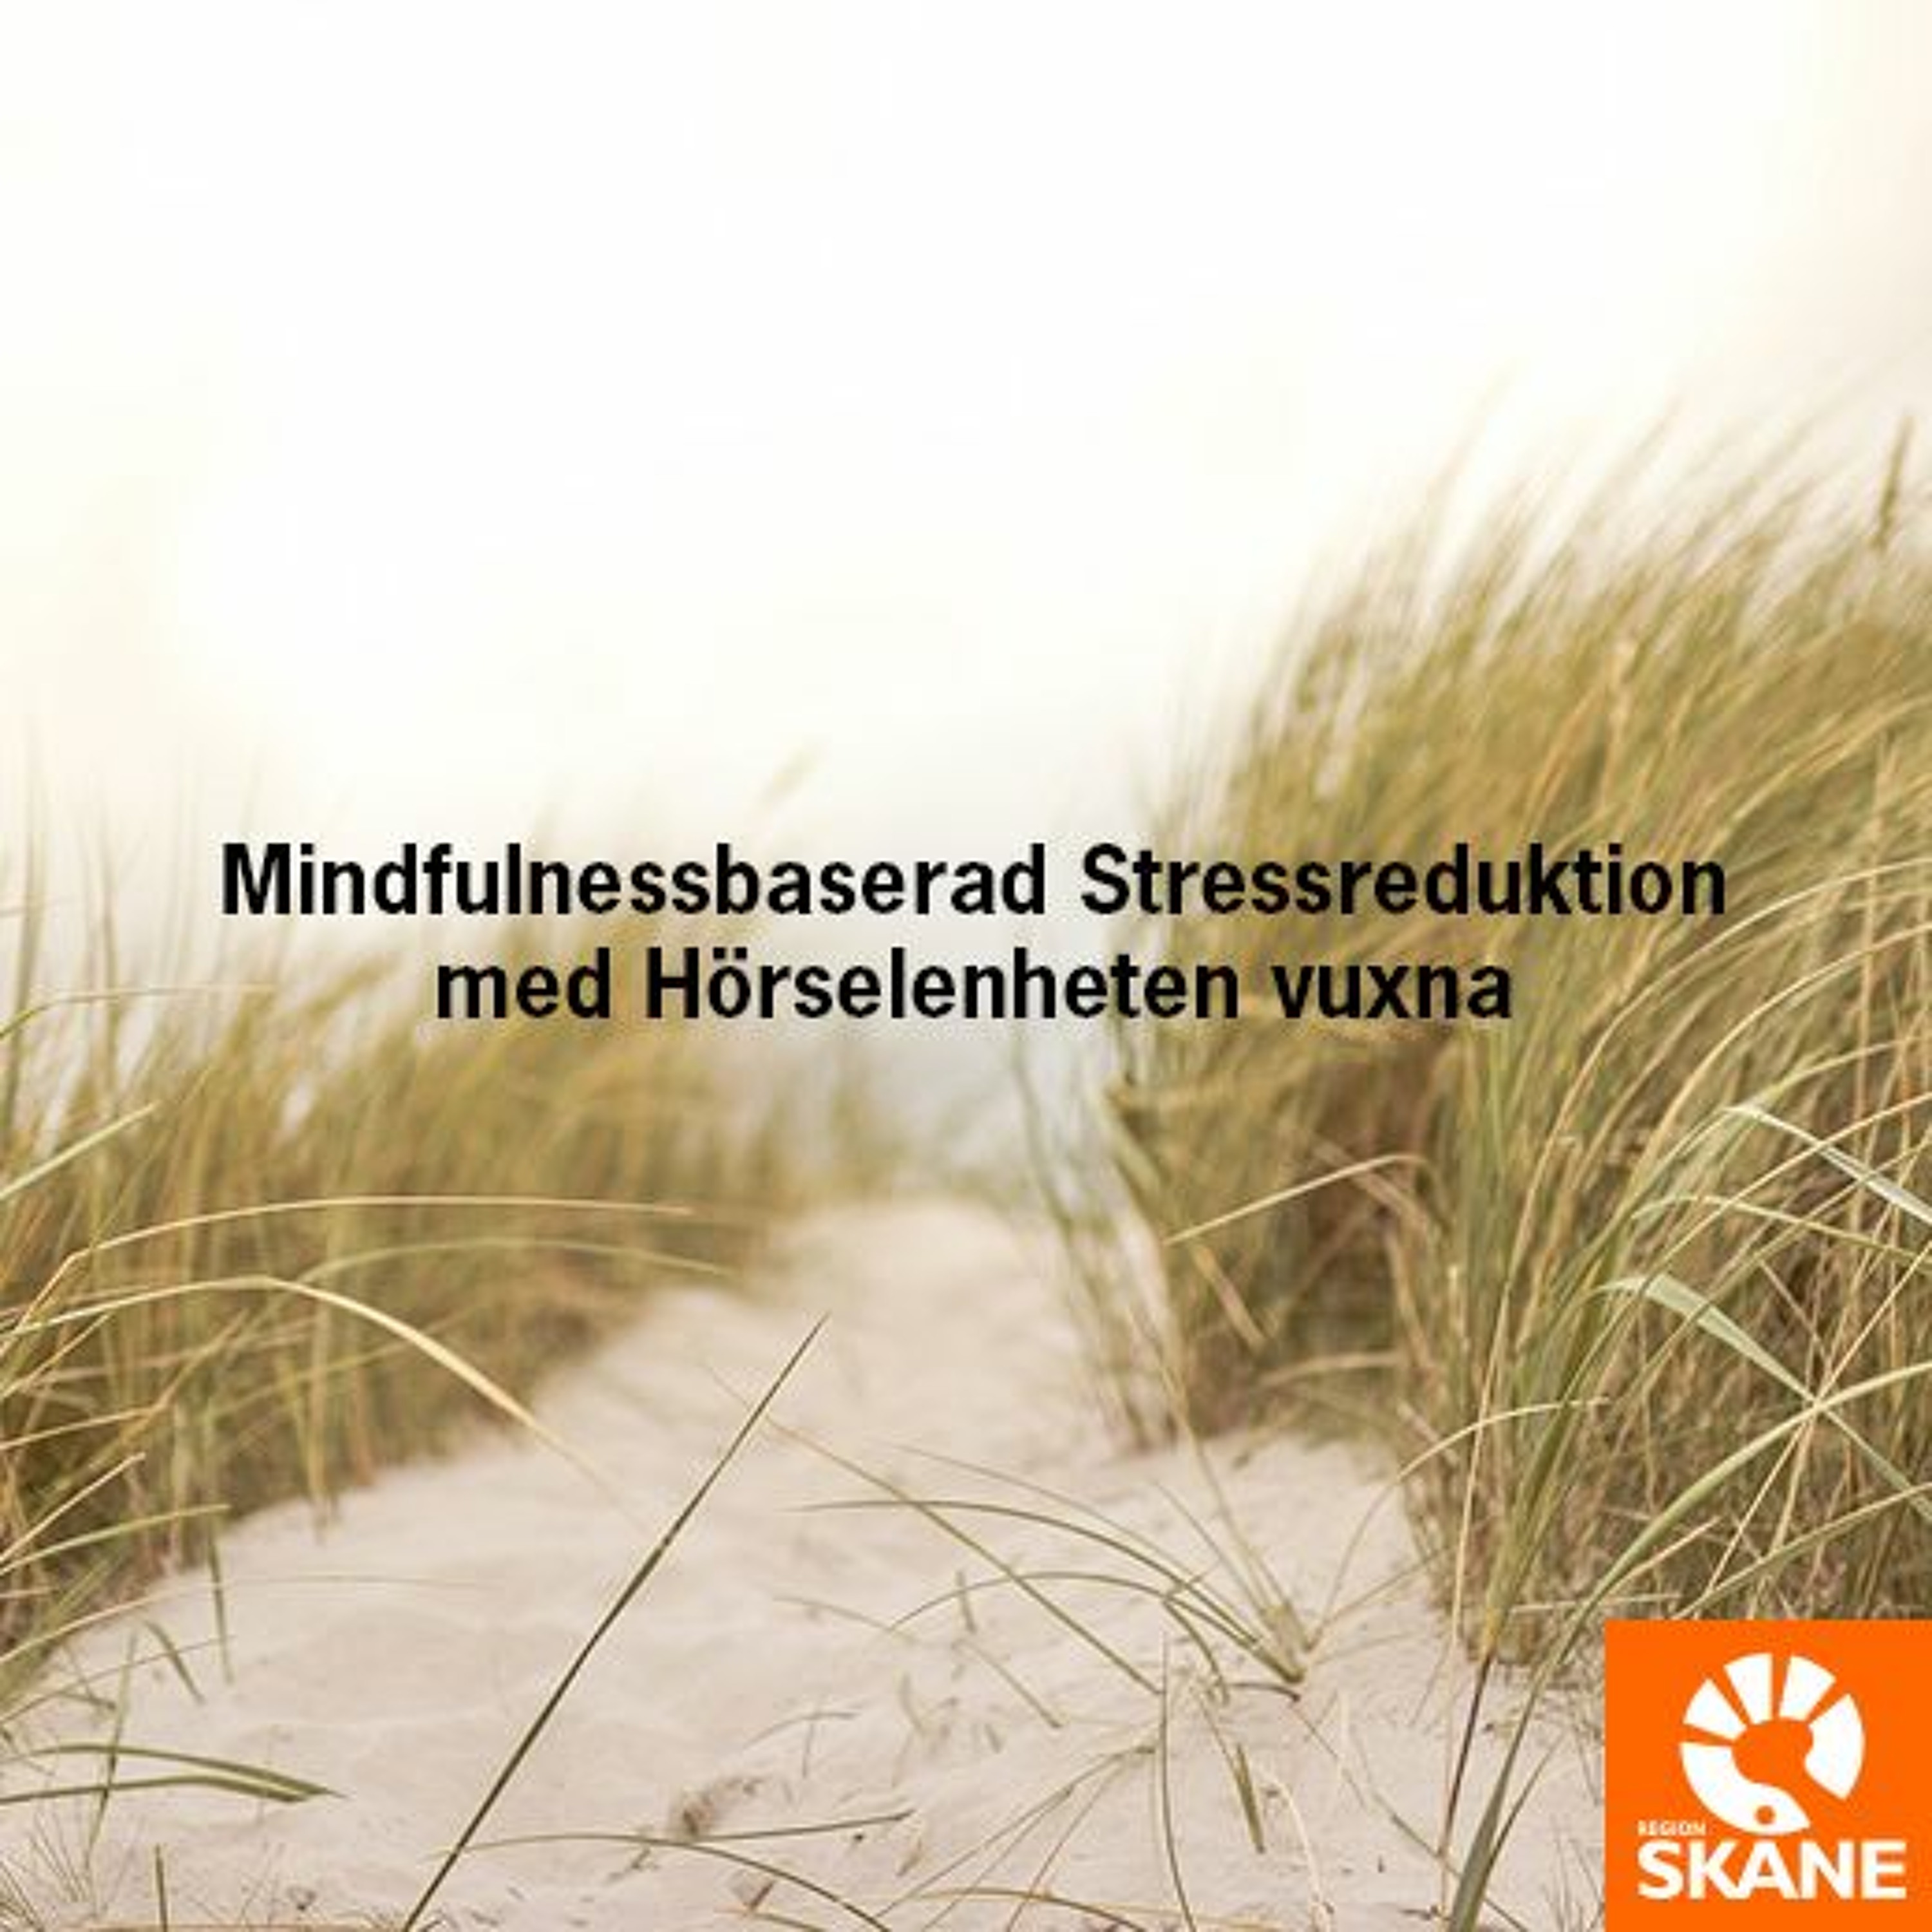 Mindfulnessbaserad Stressreduktion - Andrum